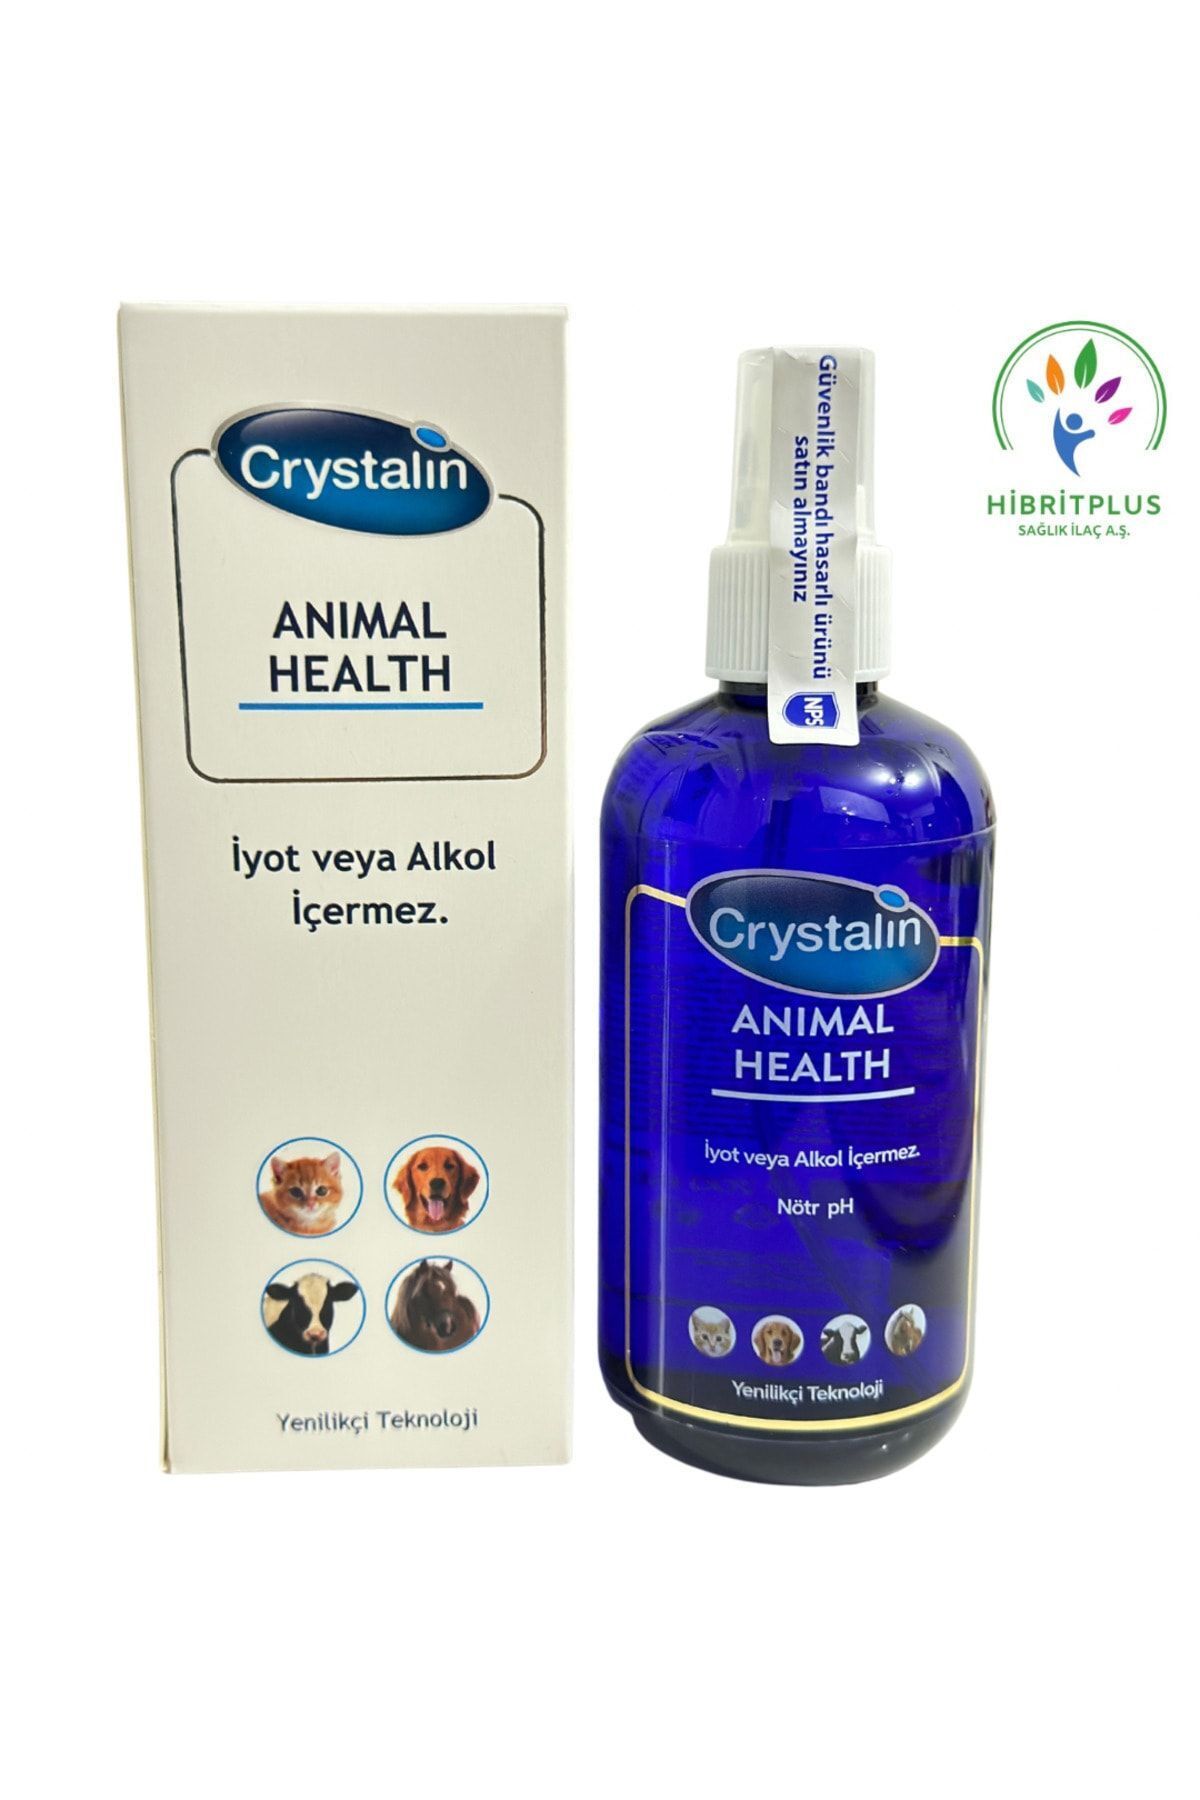 Crystalin Animal Health 250 ml Hibritplus 2026 Miatlı